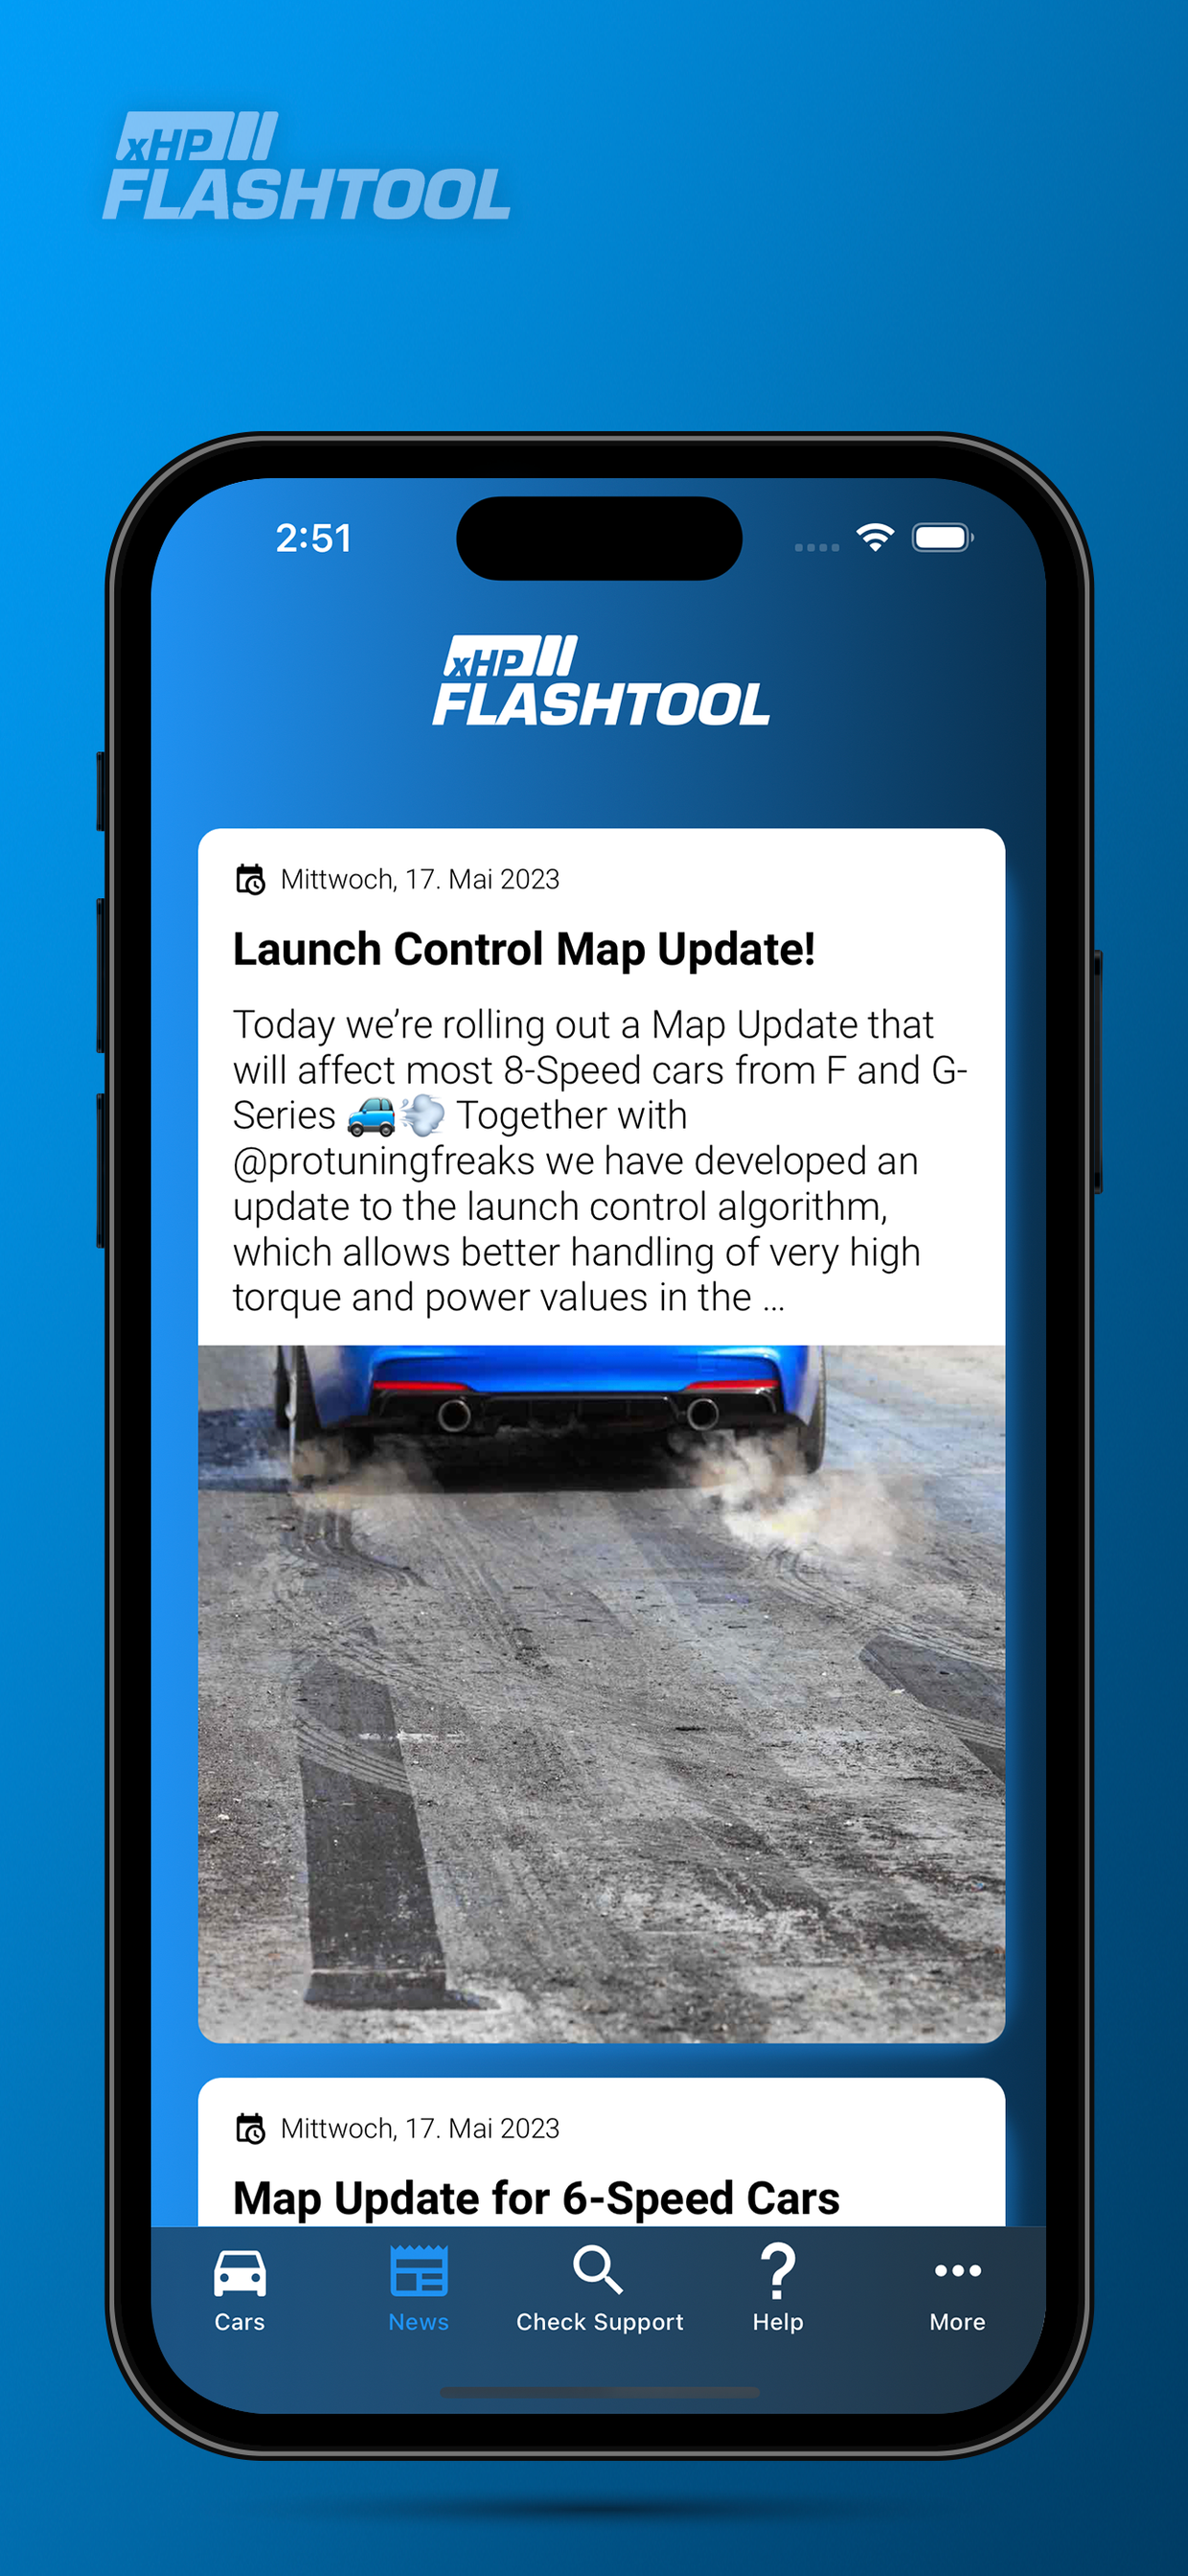 Screen xHP Flashtool App with News Feed